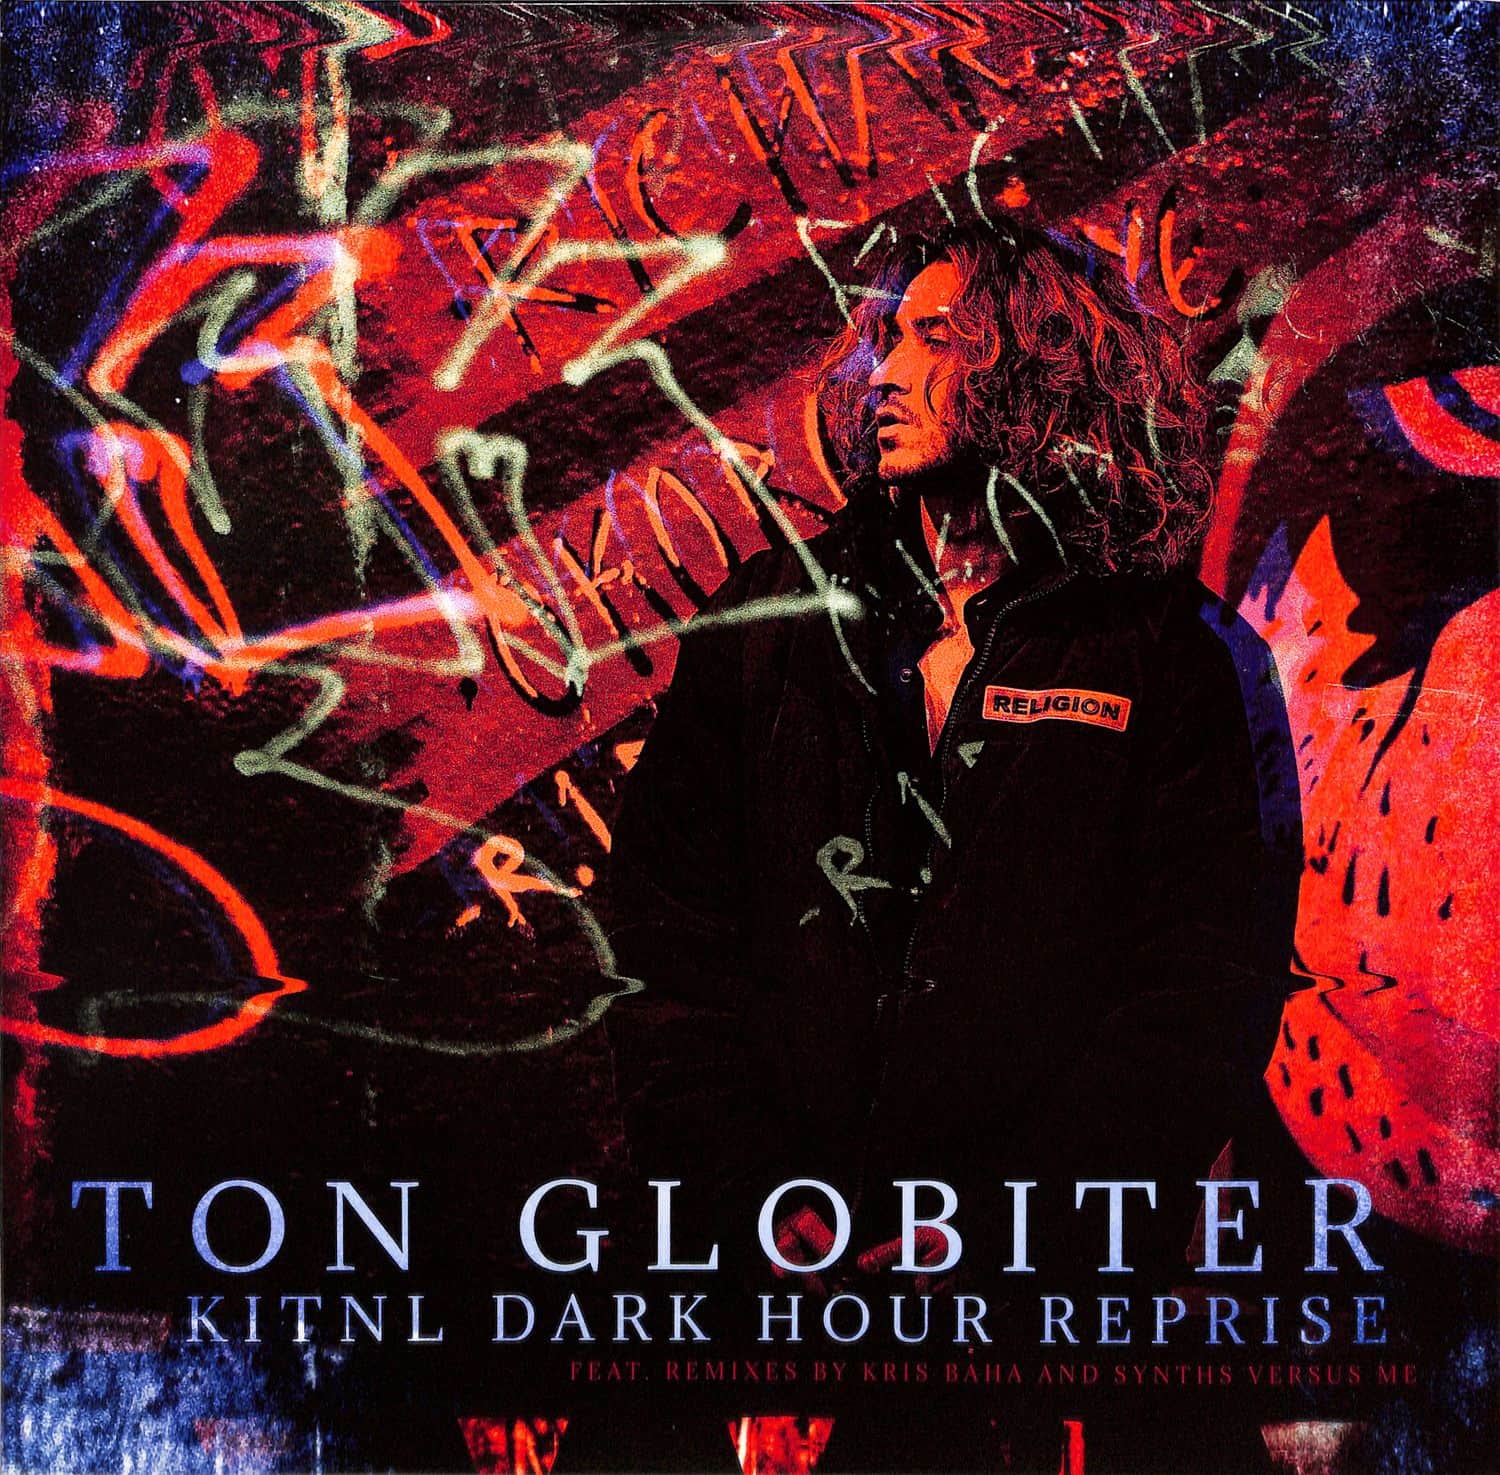 Ton Globiter - KITNL DARK HOUR REPRISE EP